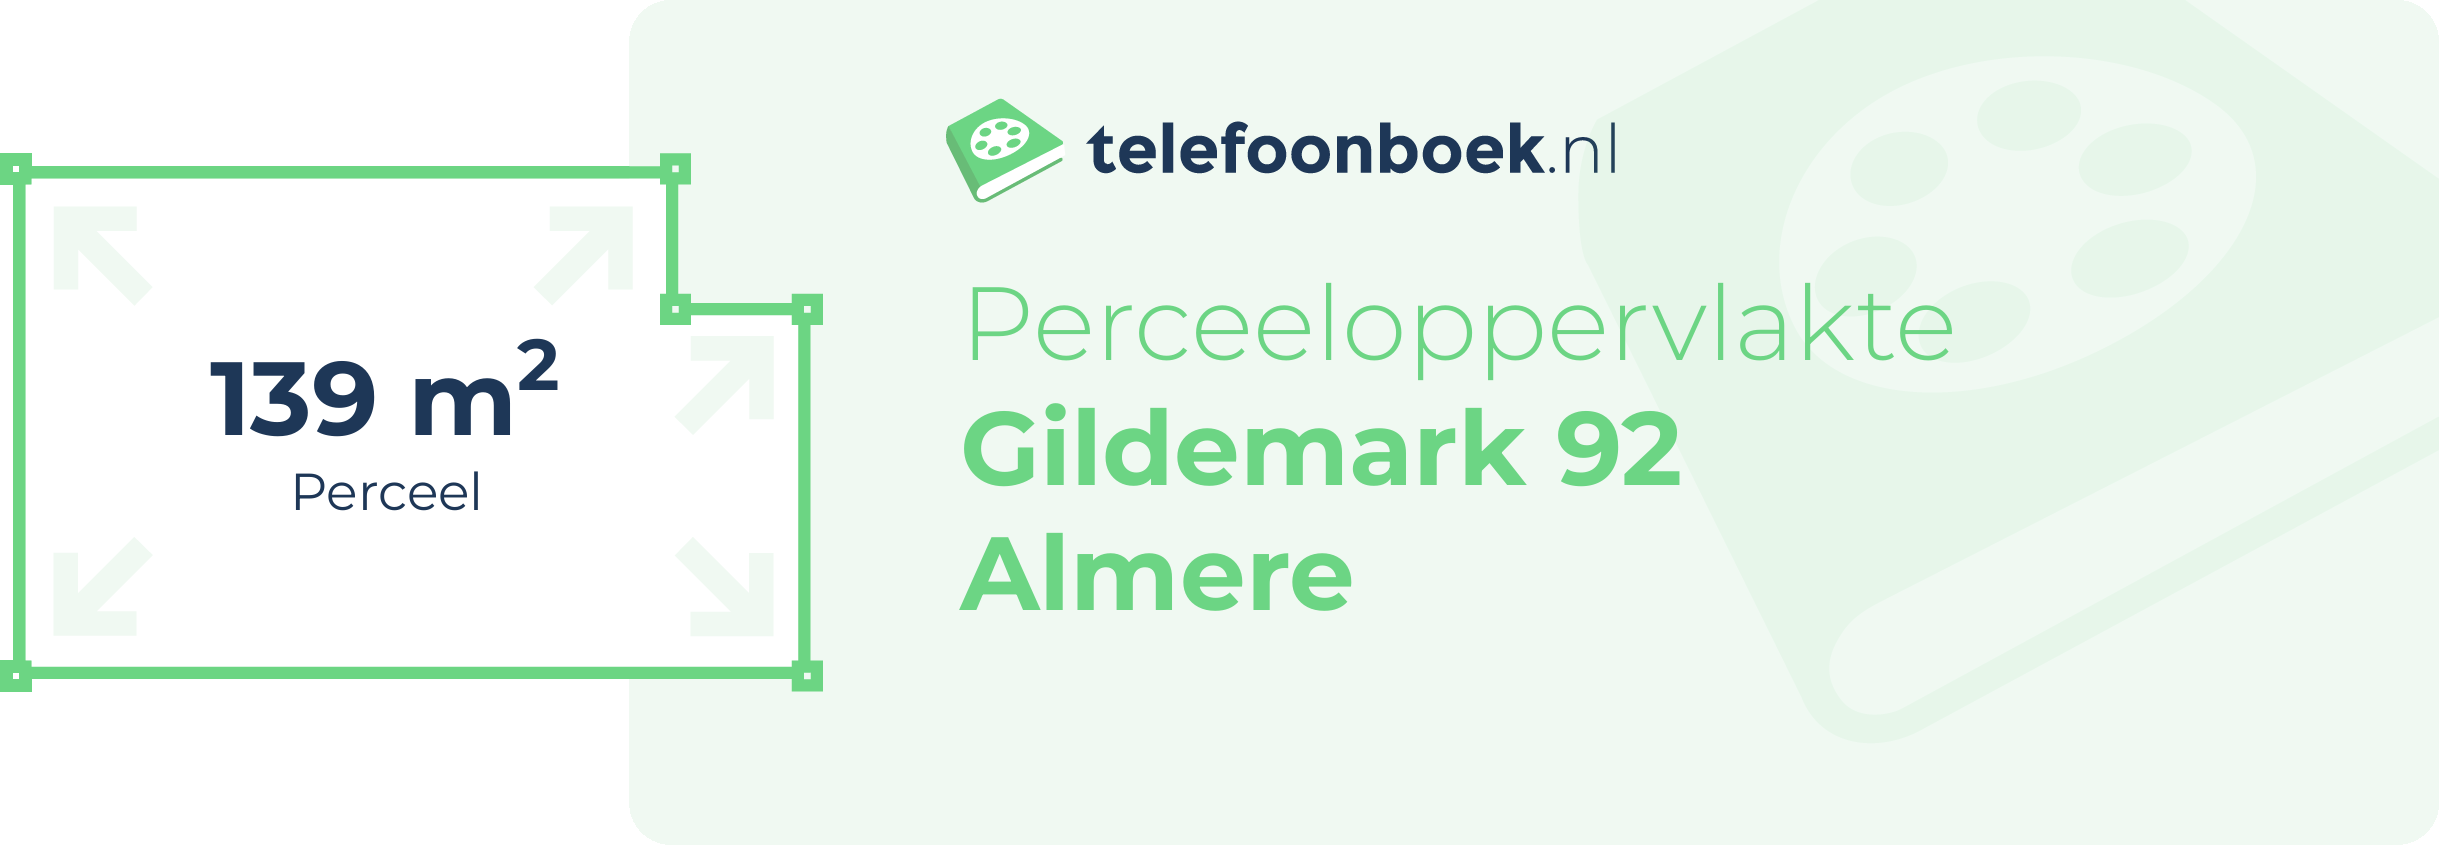 Perceeloppervlakte Gildemark 92 Almere